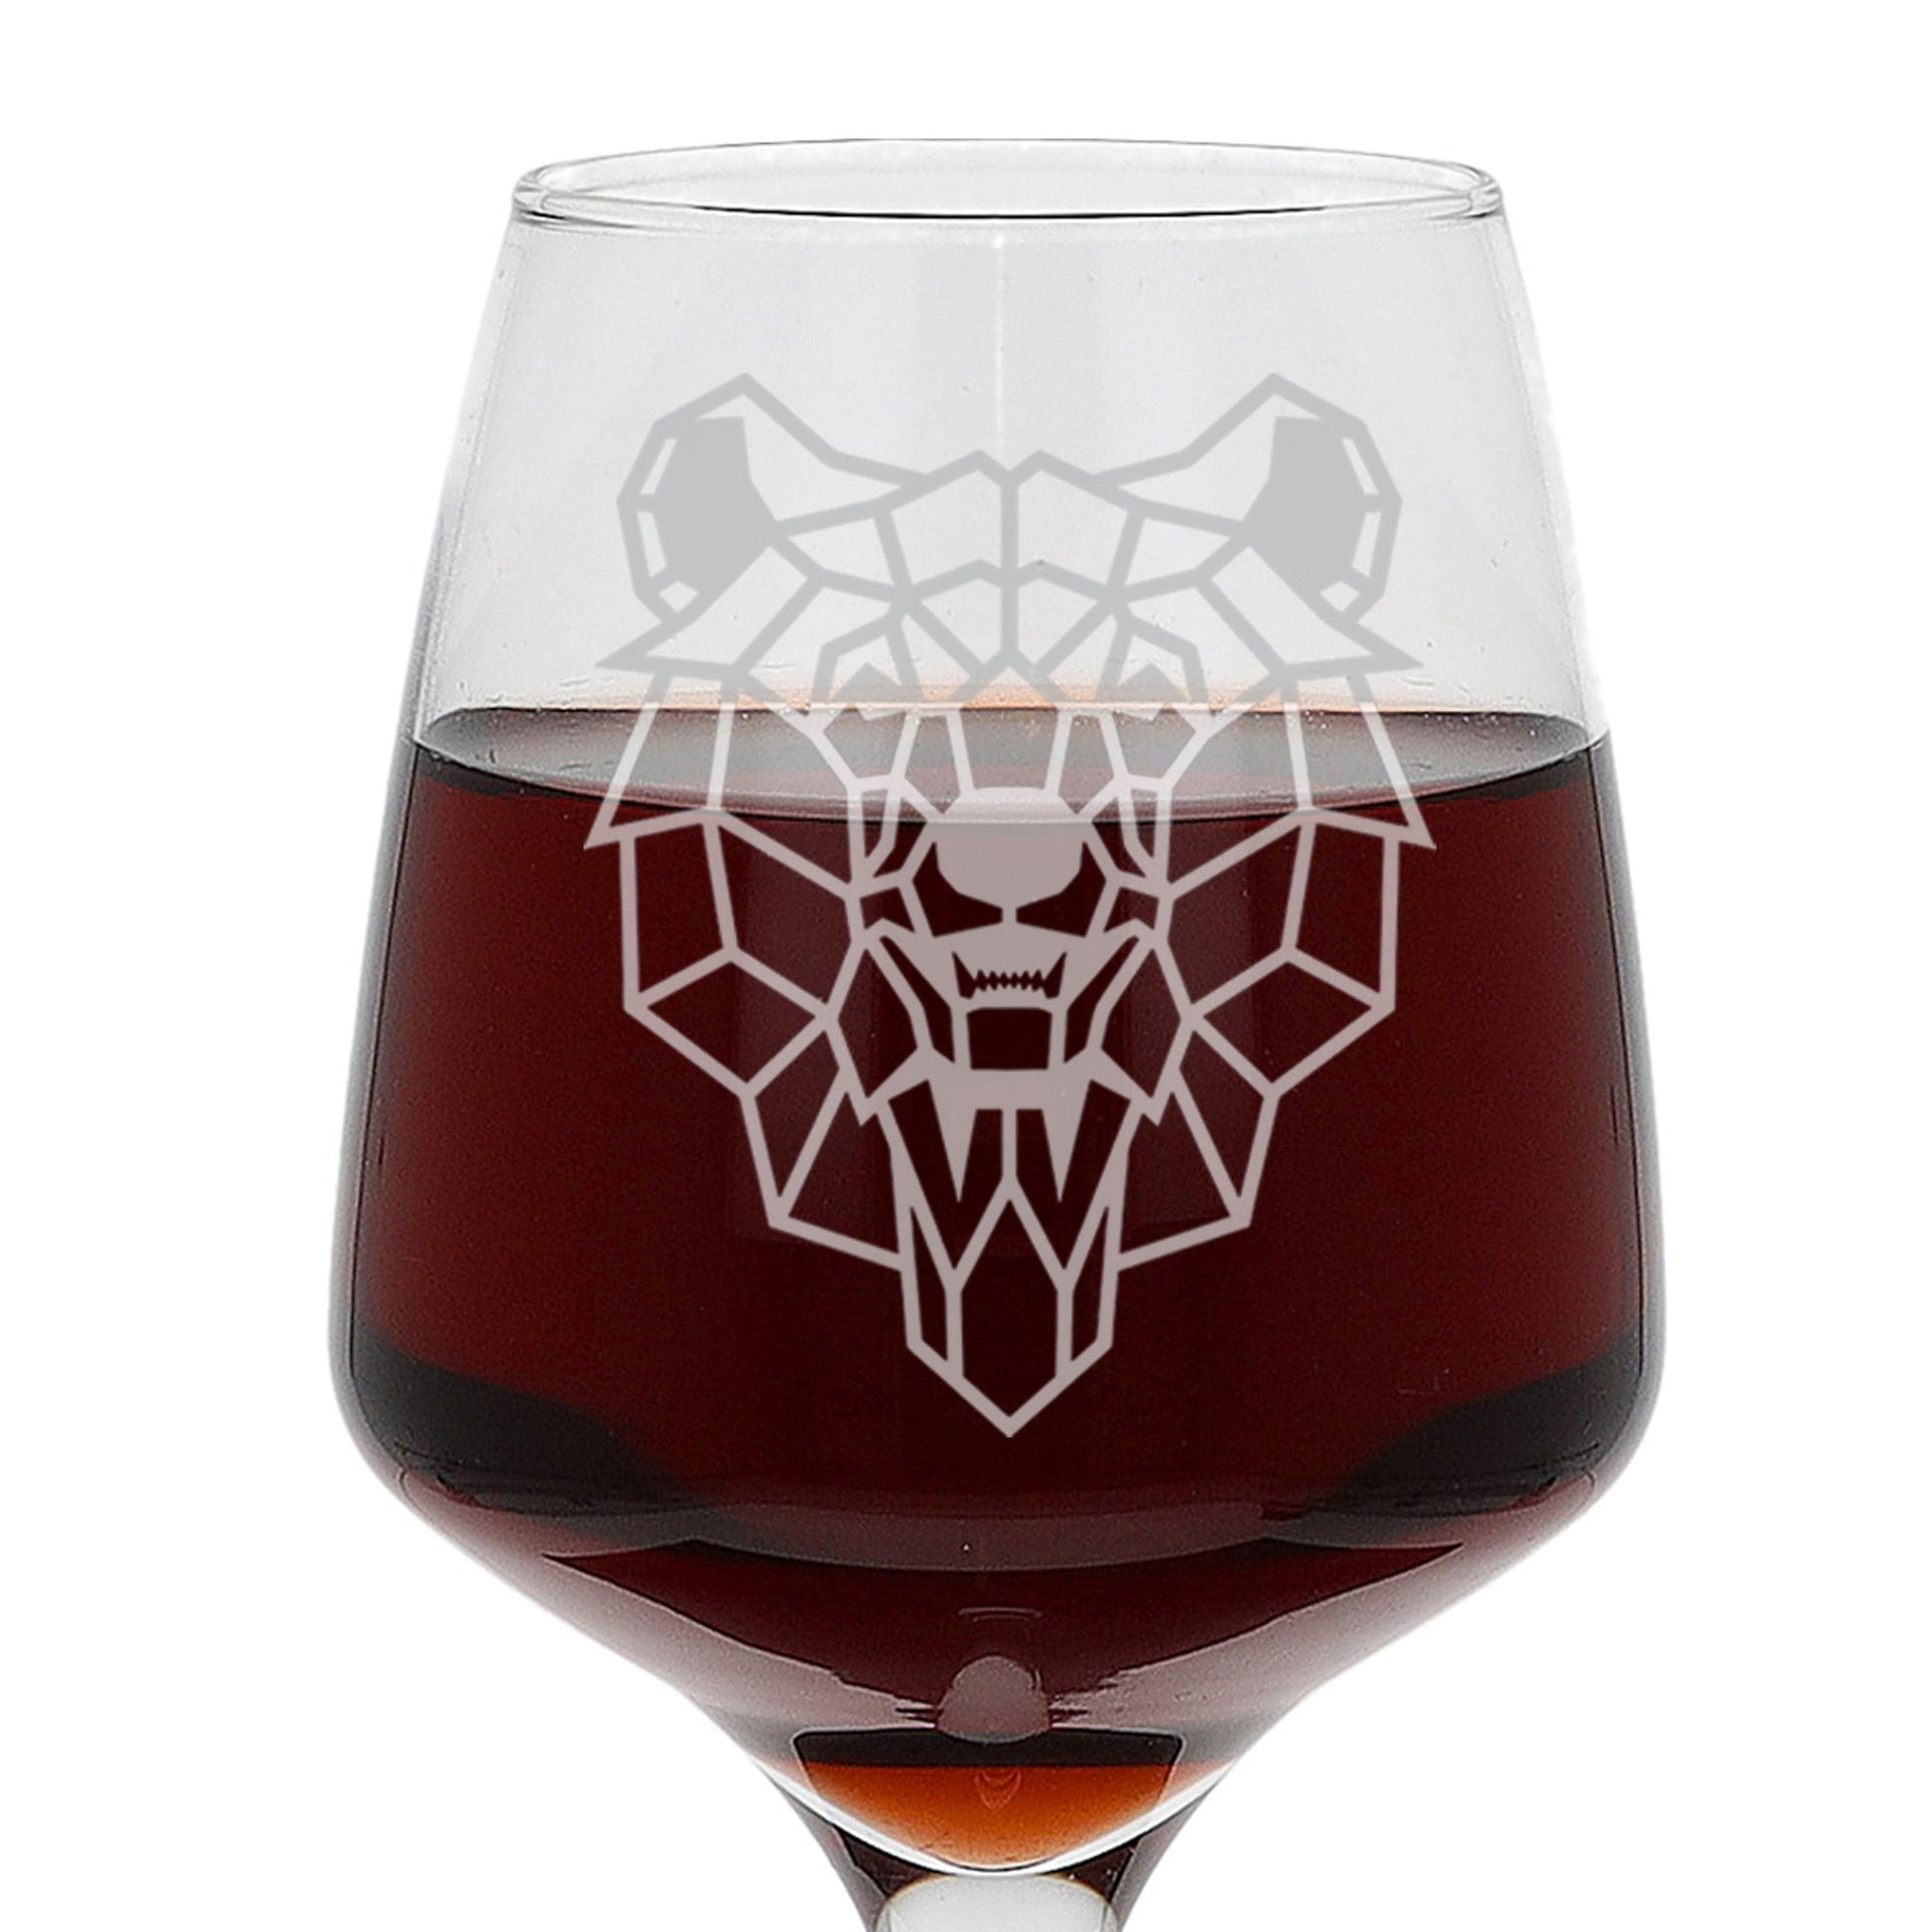 Bear Engraved Wine Glass  - Always Looking Good -   